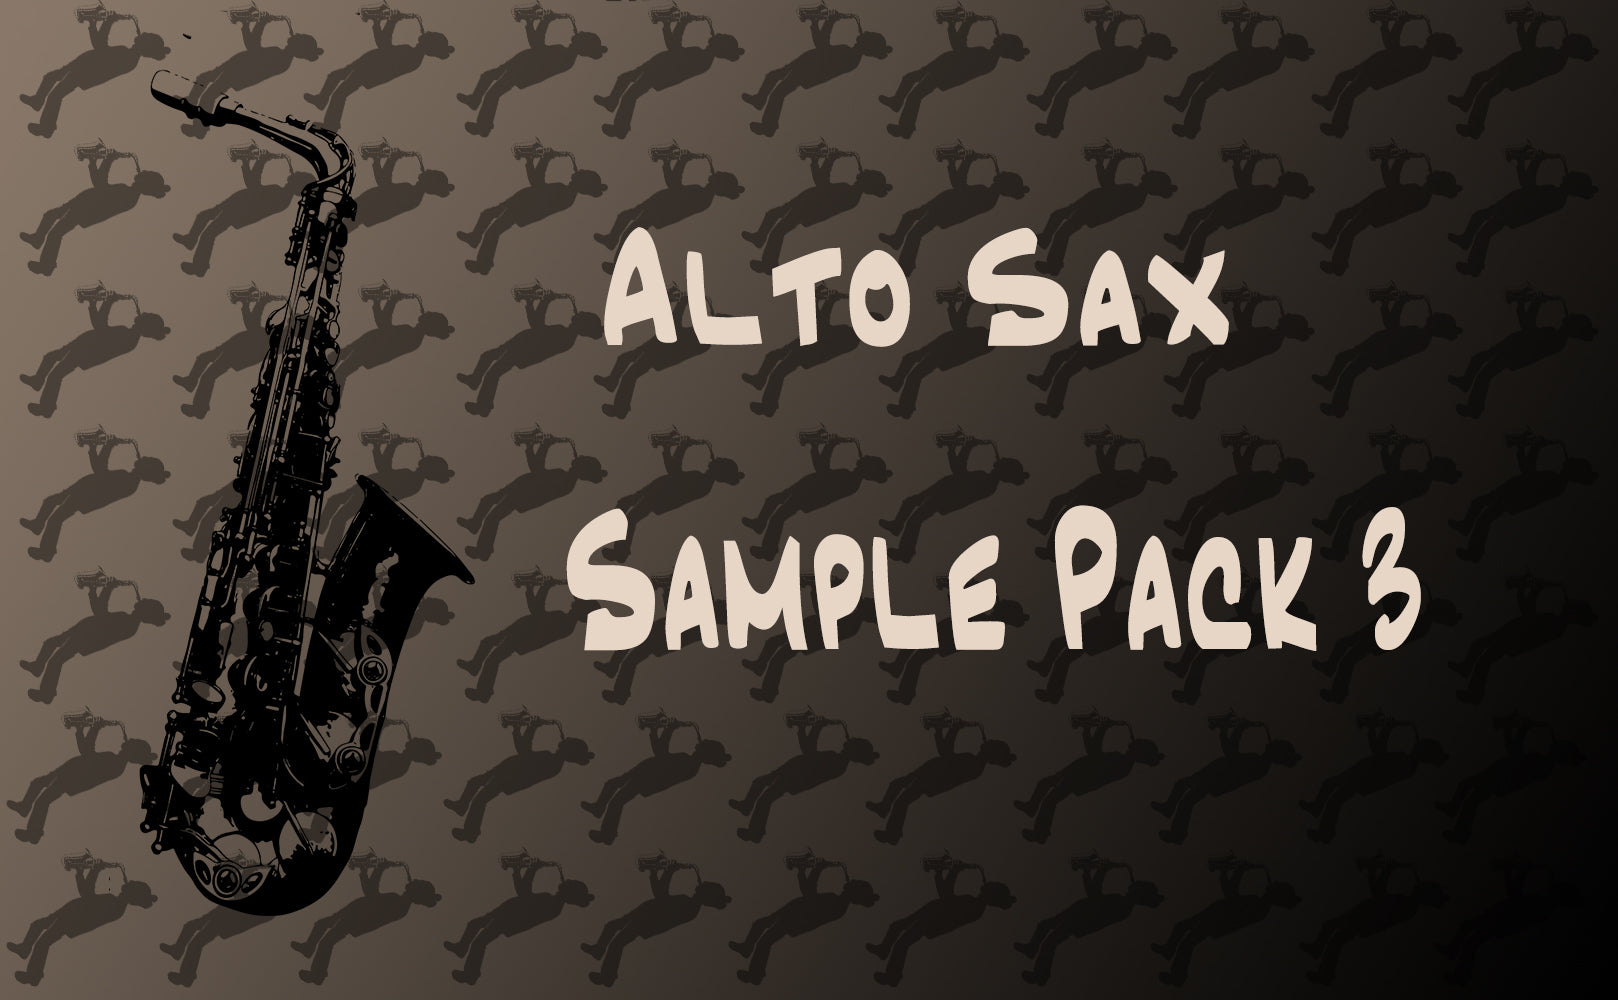 Alto Sax Sample pack 3 - Click to Listen